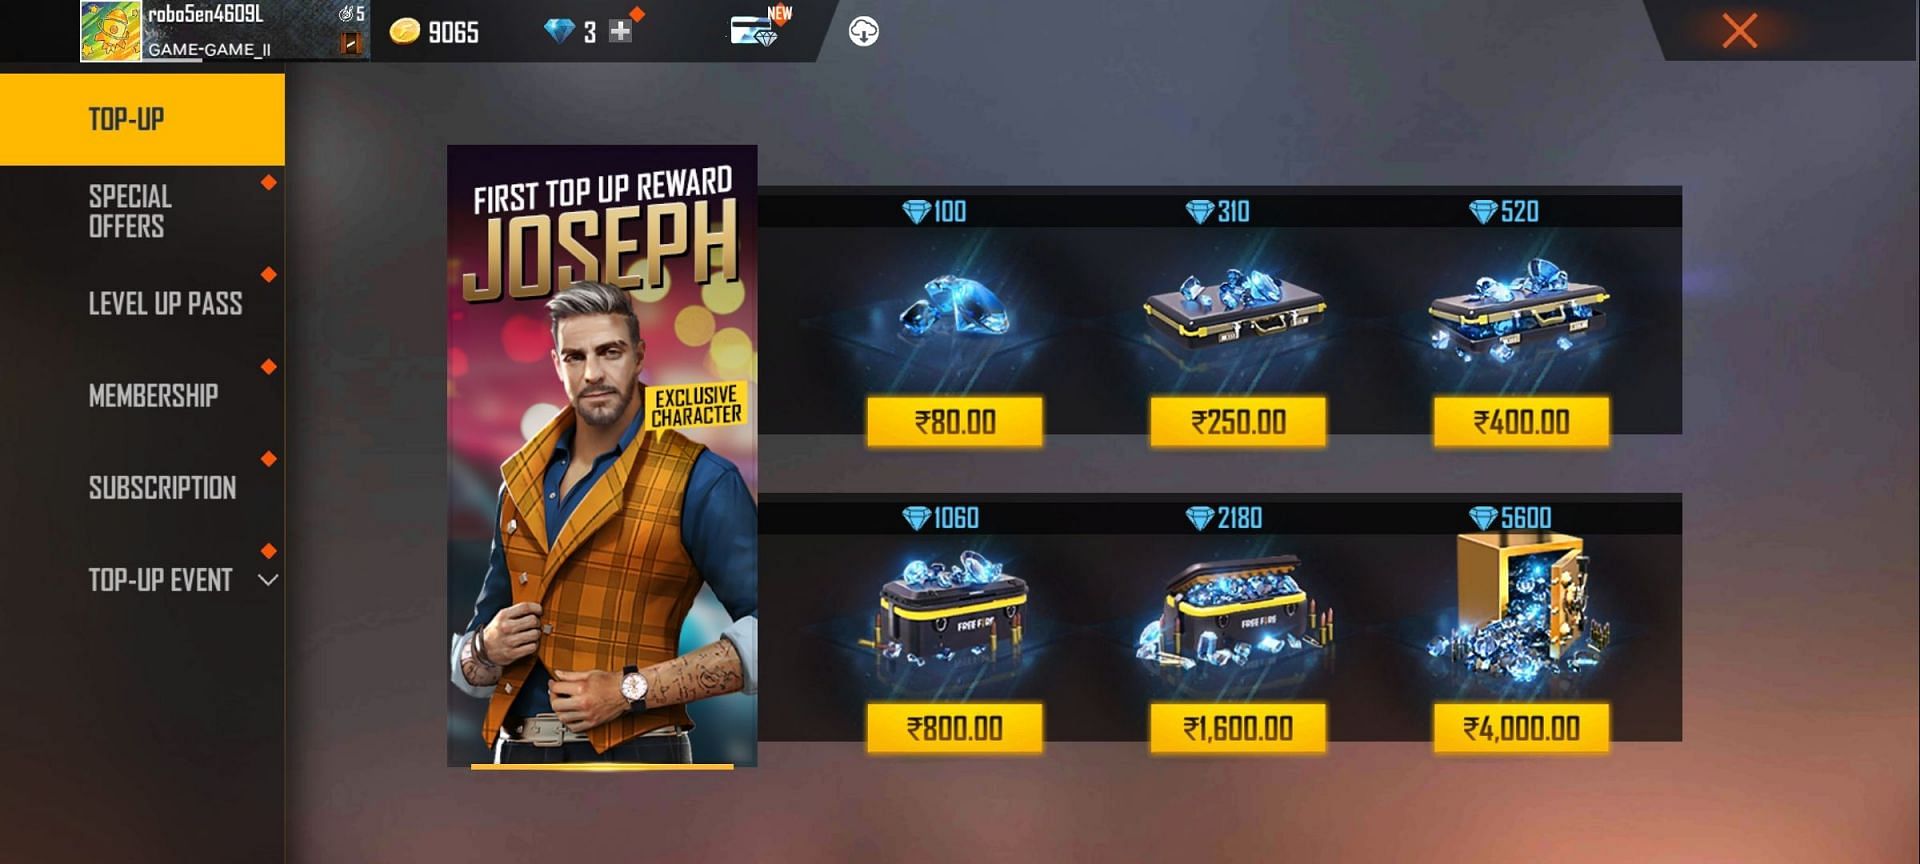 Players must choose the 520-diamond option to get the rewards (Image via Garena)